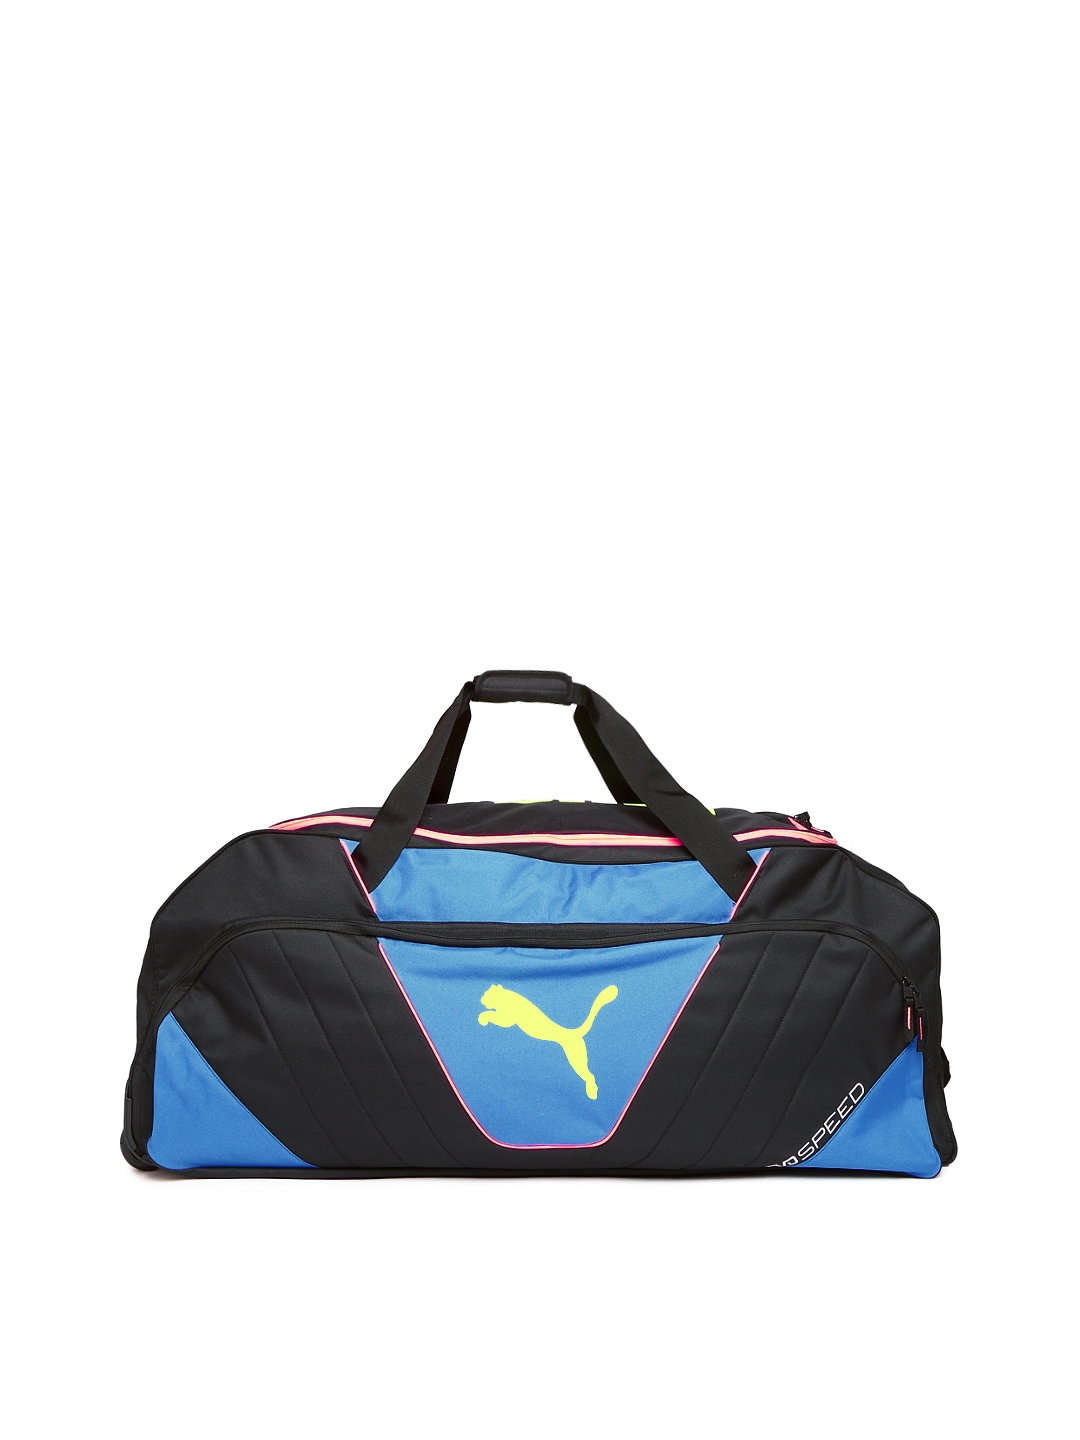 puma travel bag with wheels